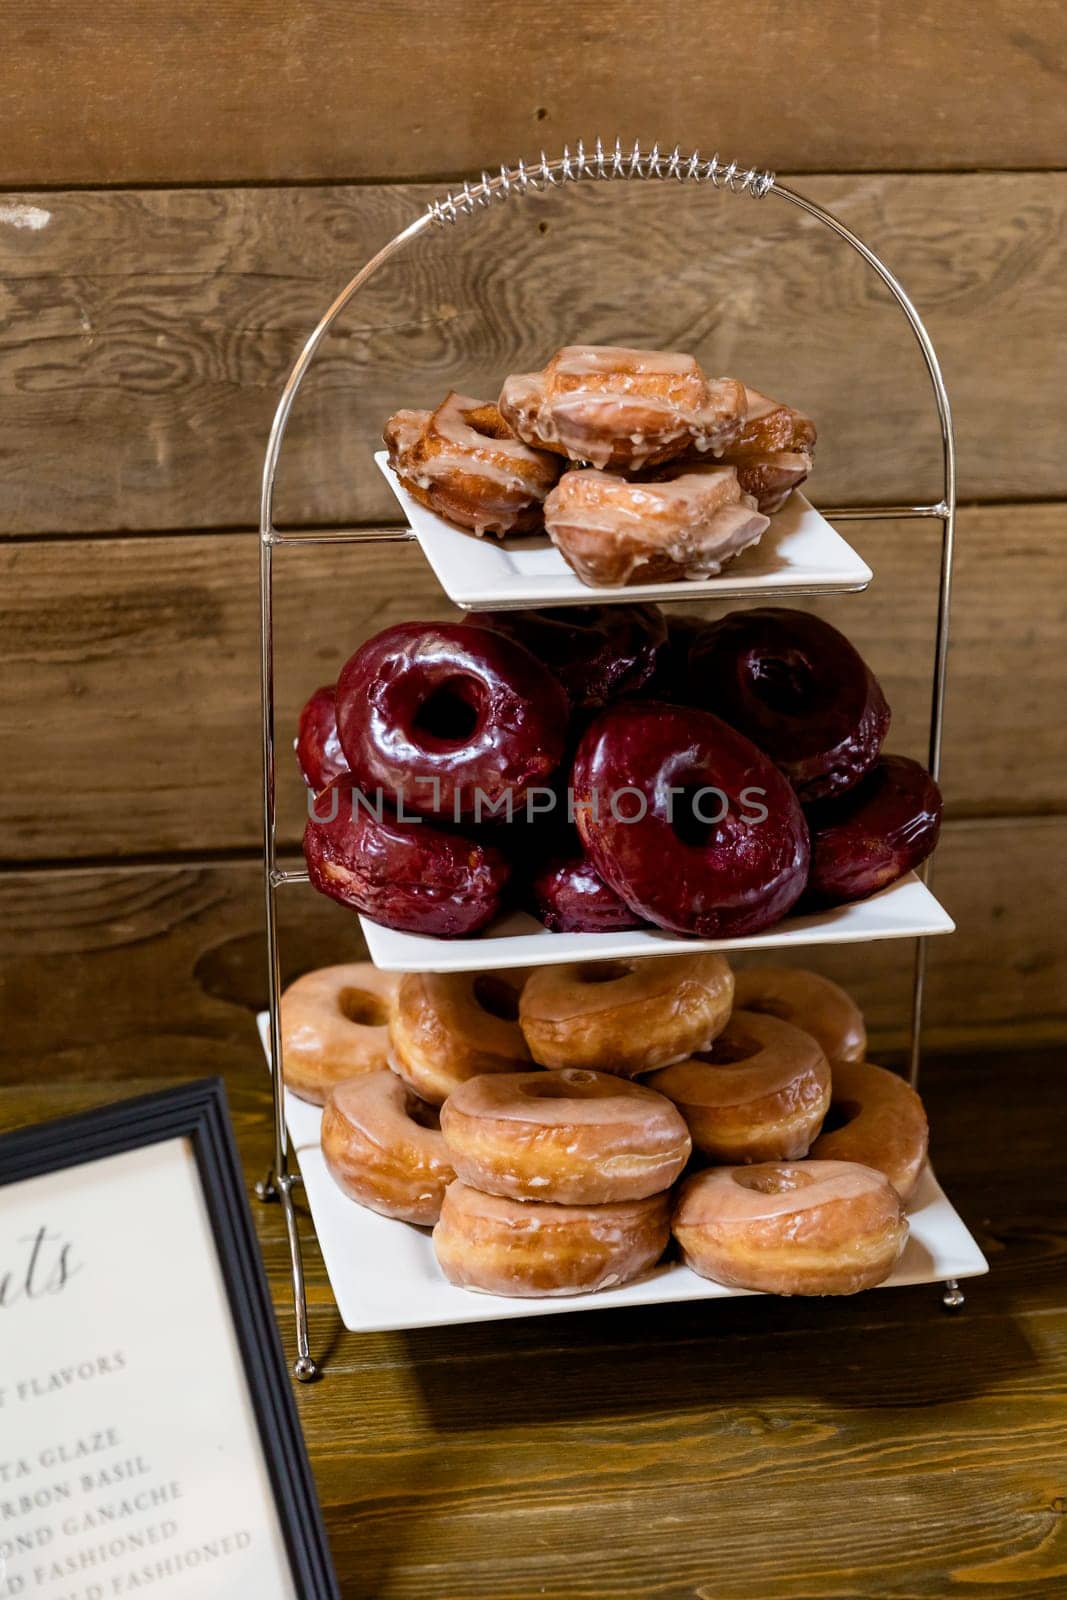 Wedding Donuts at Dessert Bar Reception by joshuaraineyphotography